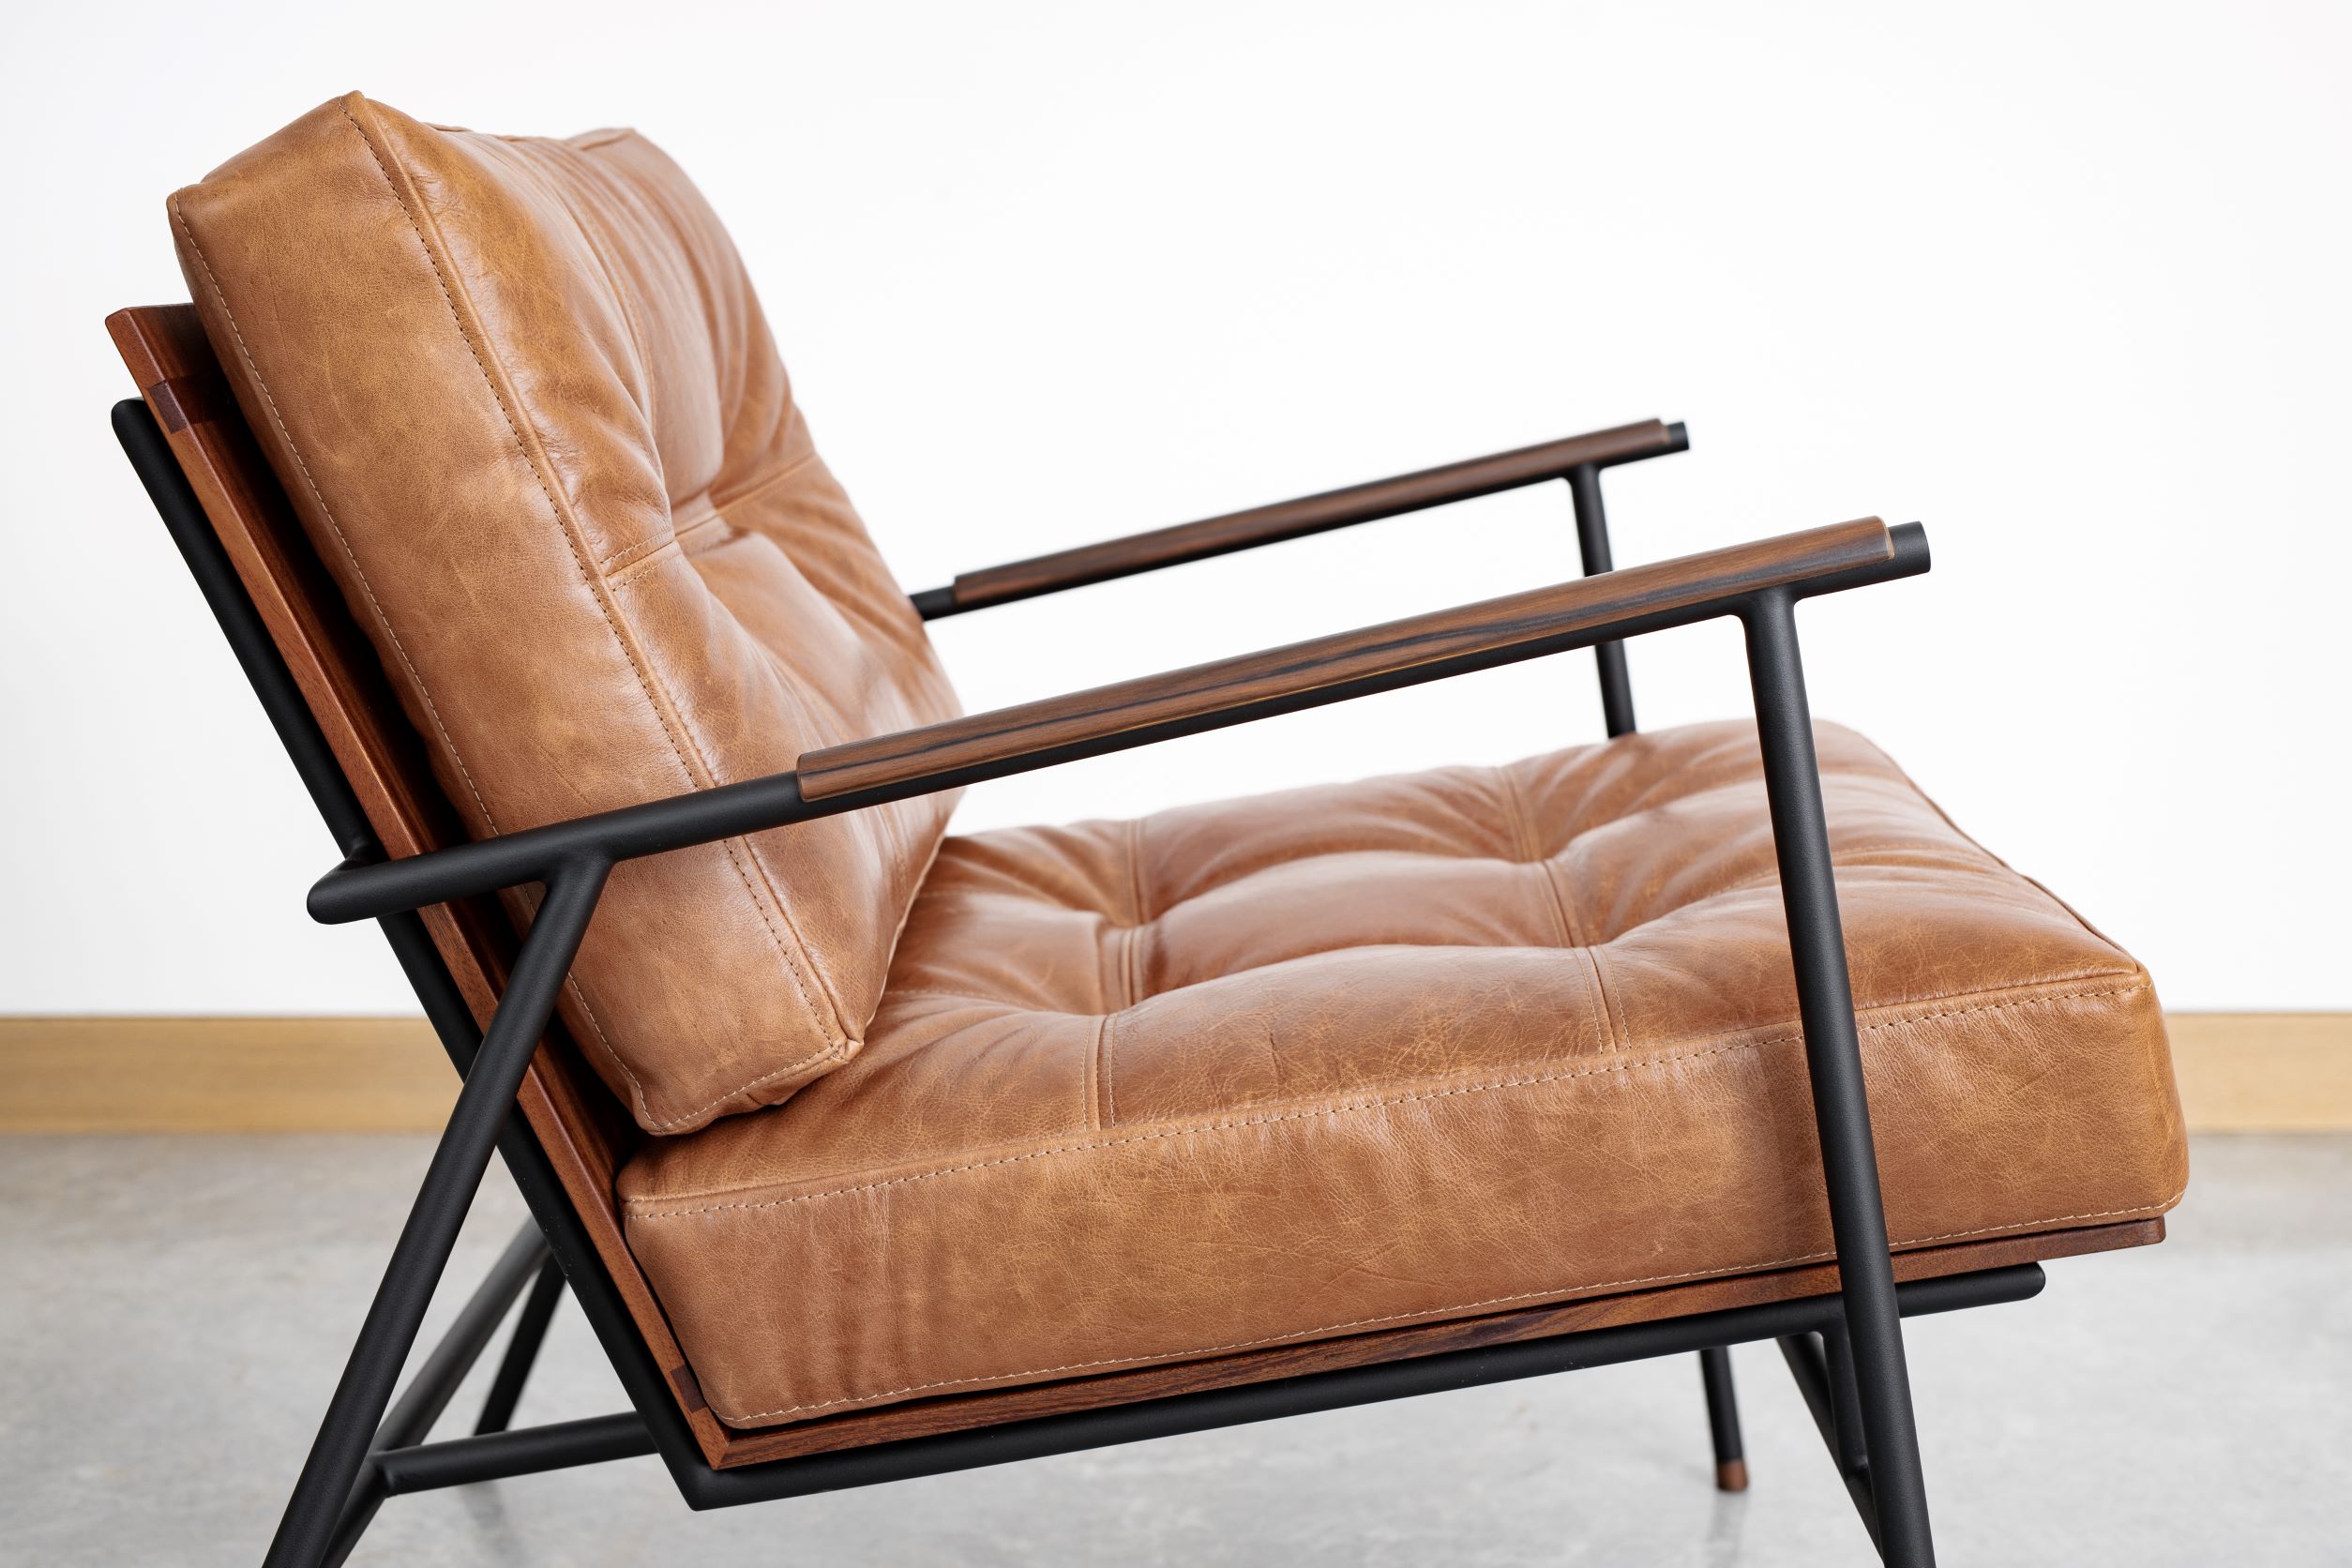 MUSE Design Winners - Smoke Chair